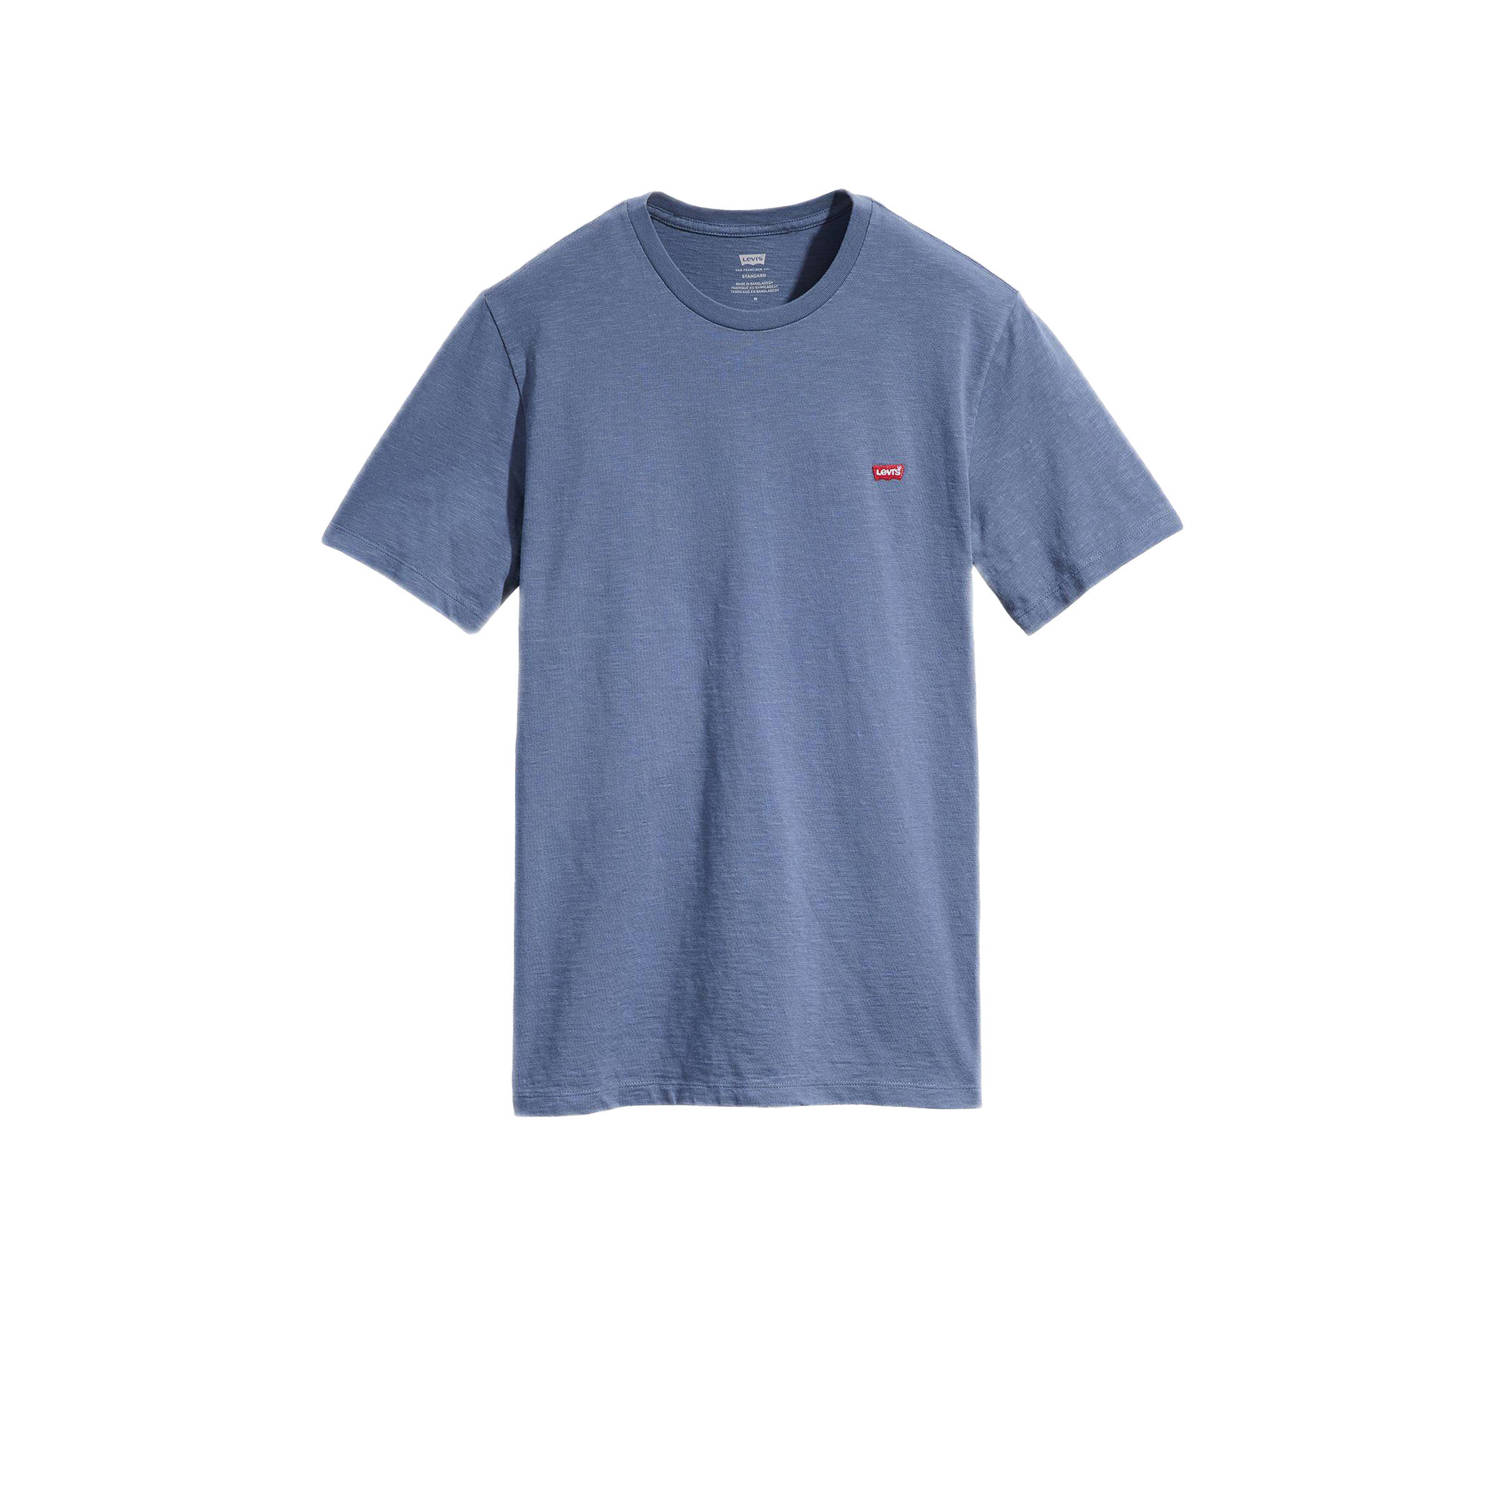 Levi's T-shirt original housemark met logo vintage indigo